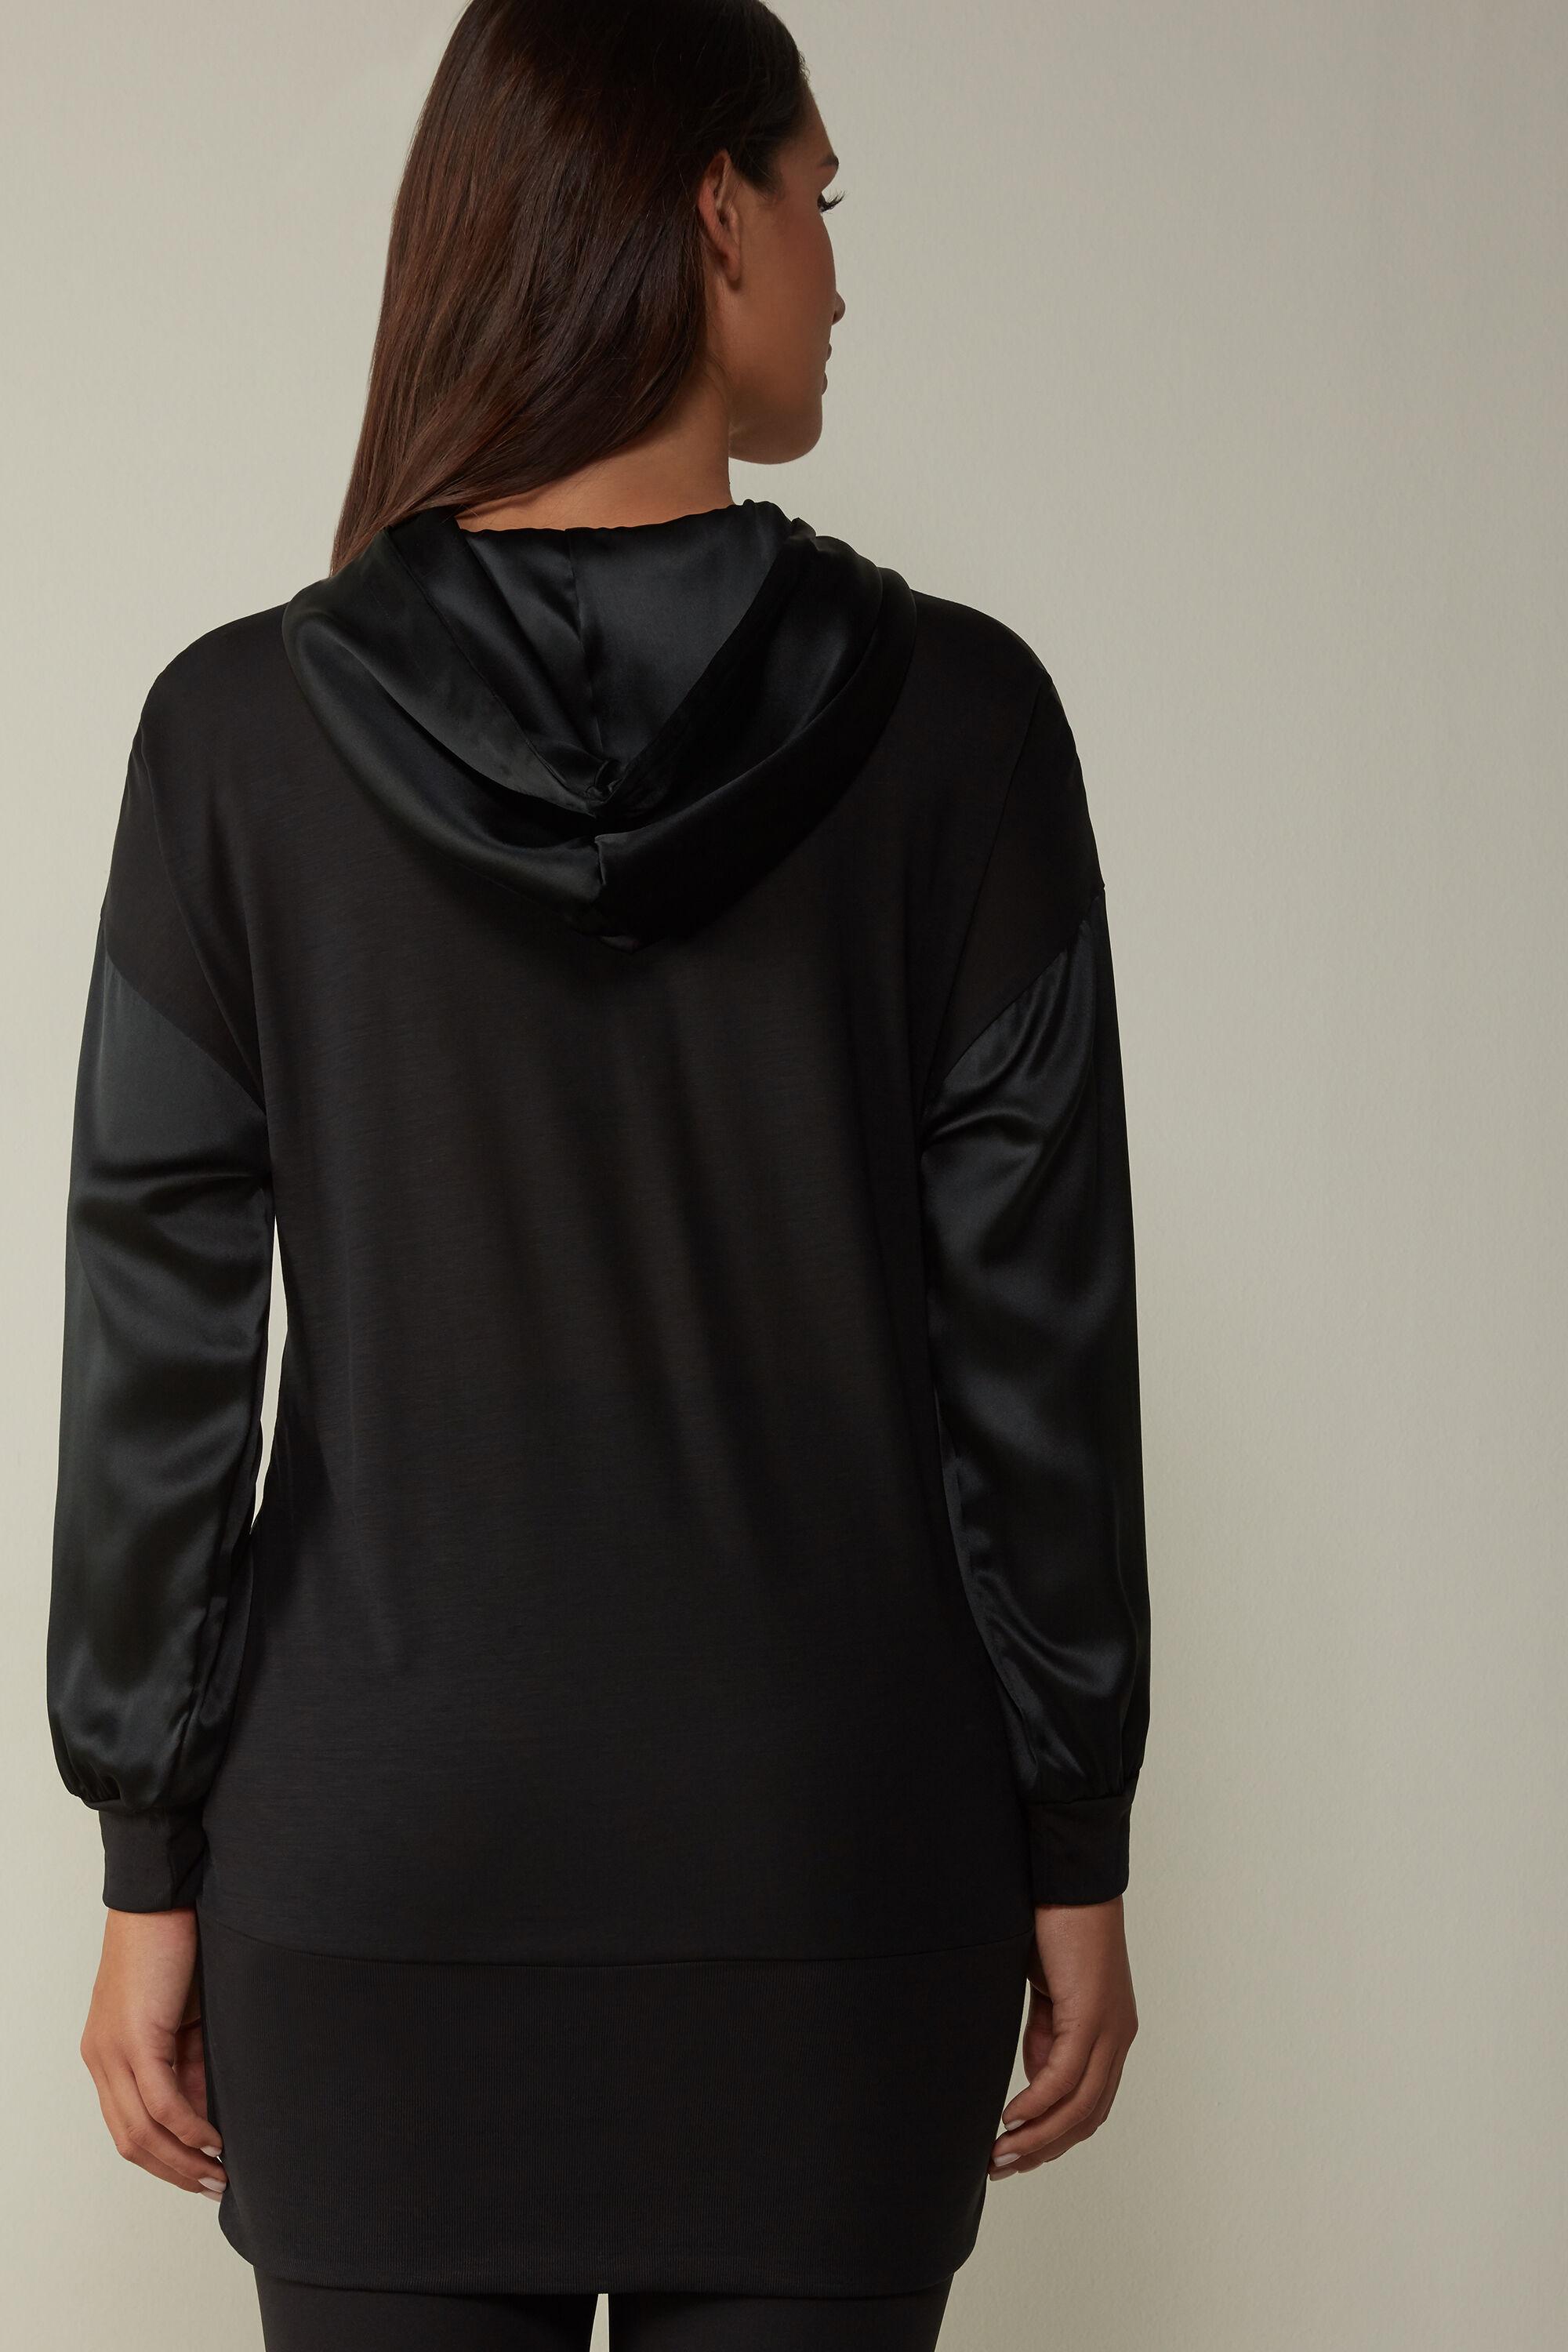 Intimissimi Silk And Lyocell Hooded Sweatshirt in Black | Lyst